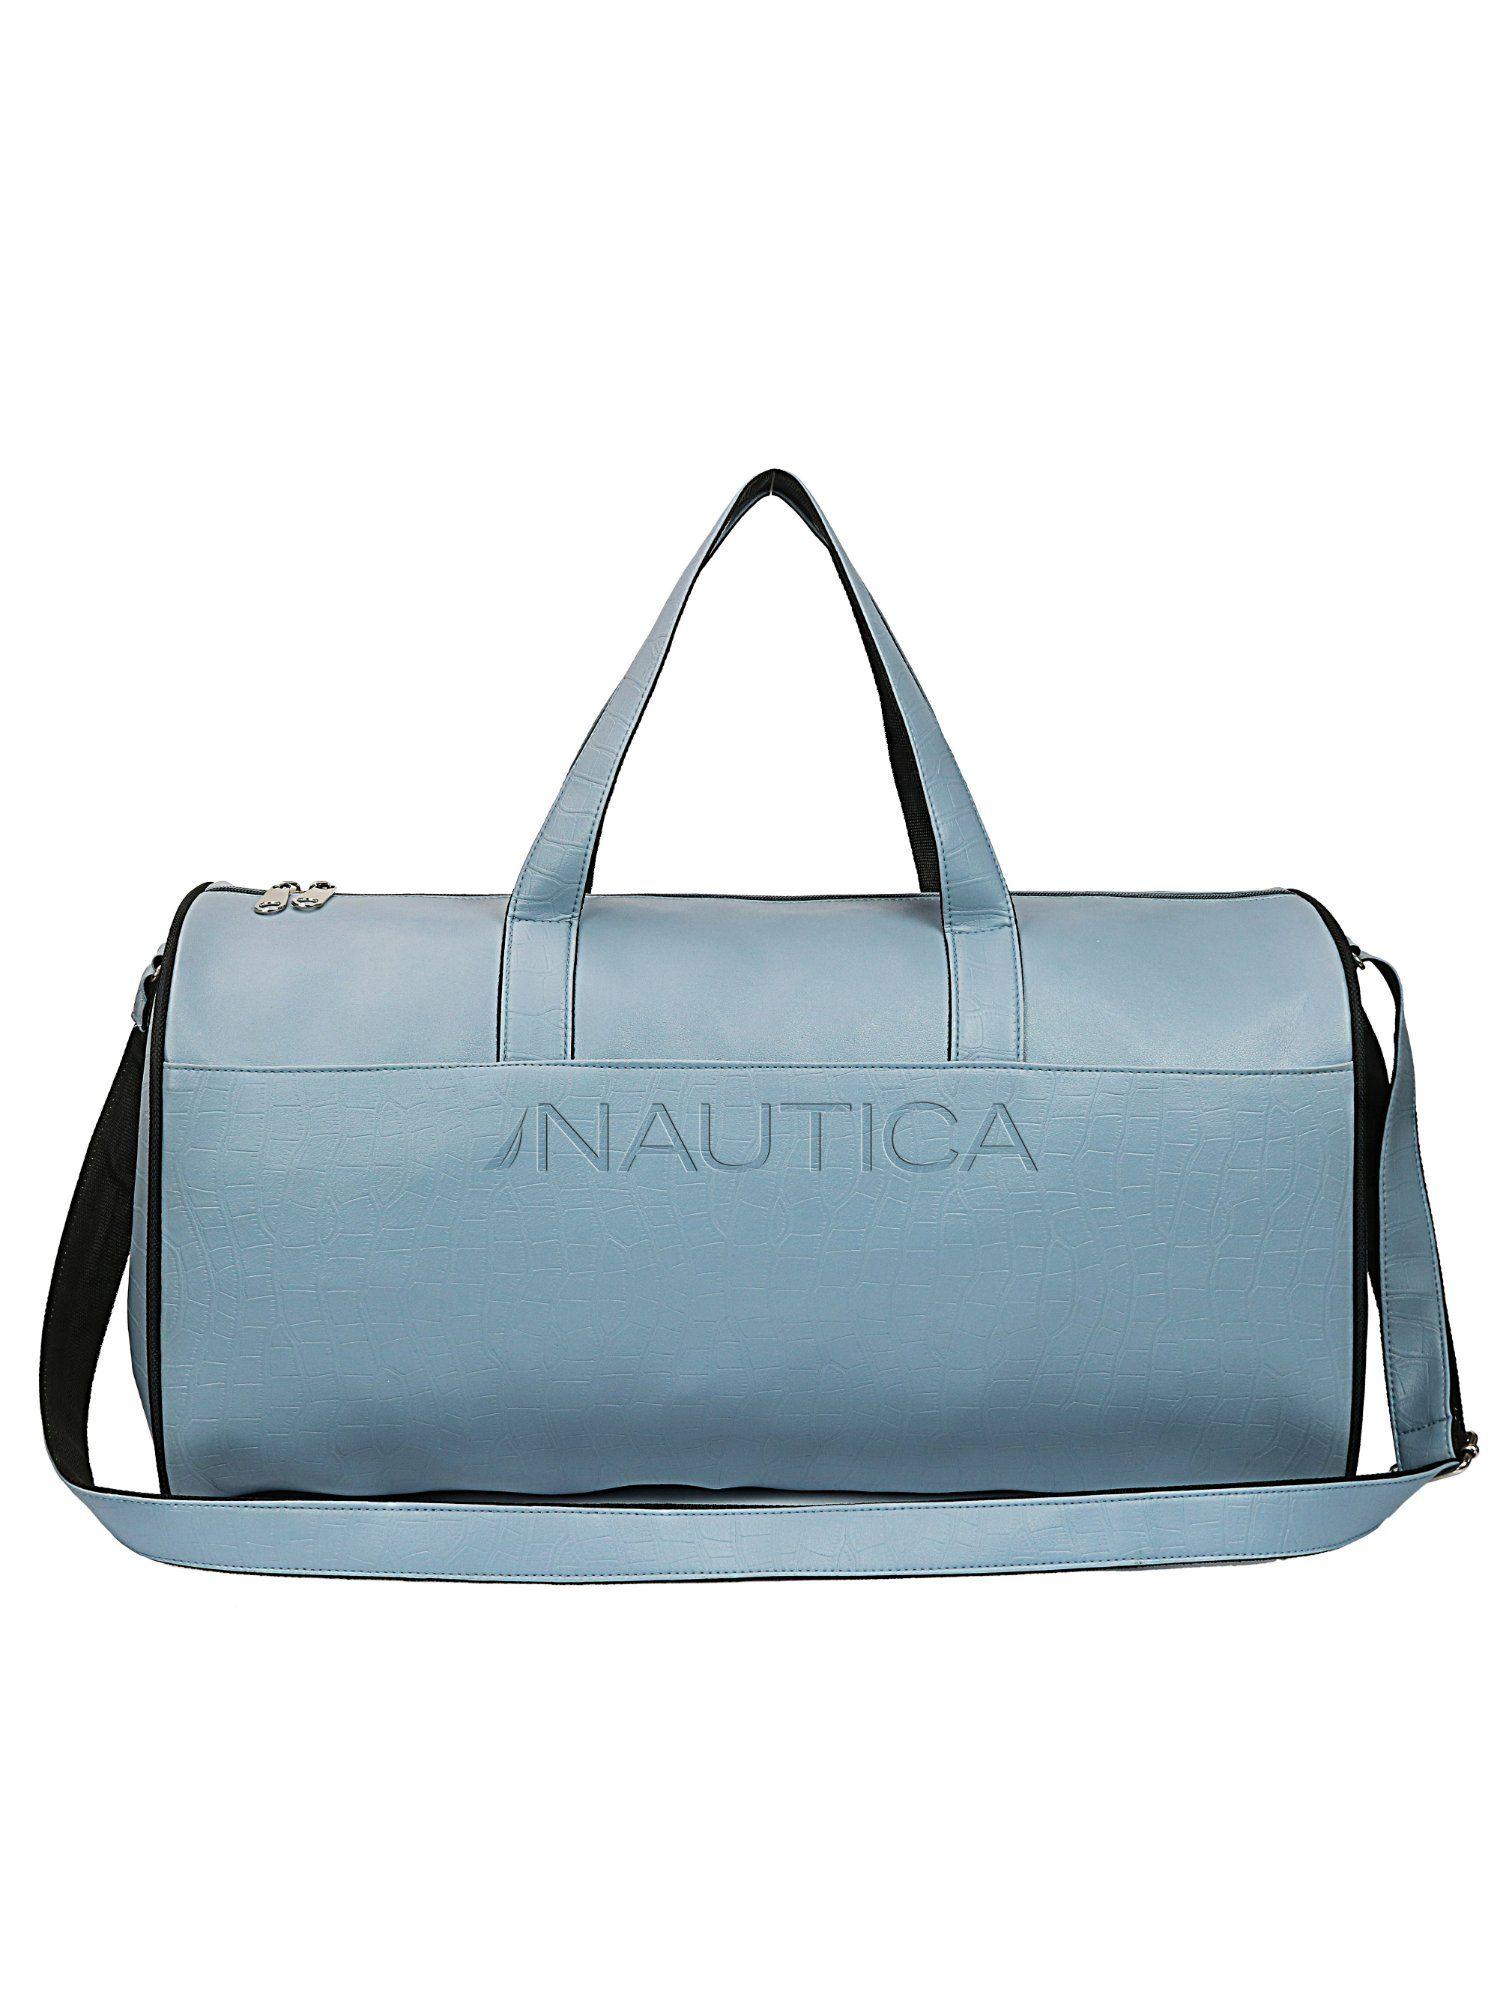 Duffle Bag for Travel Suitable for Men & Women - Blue (S)